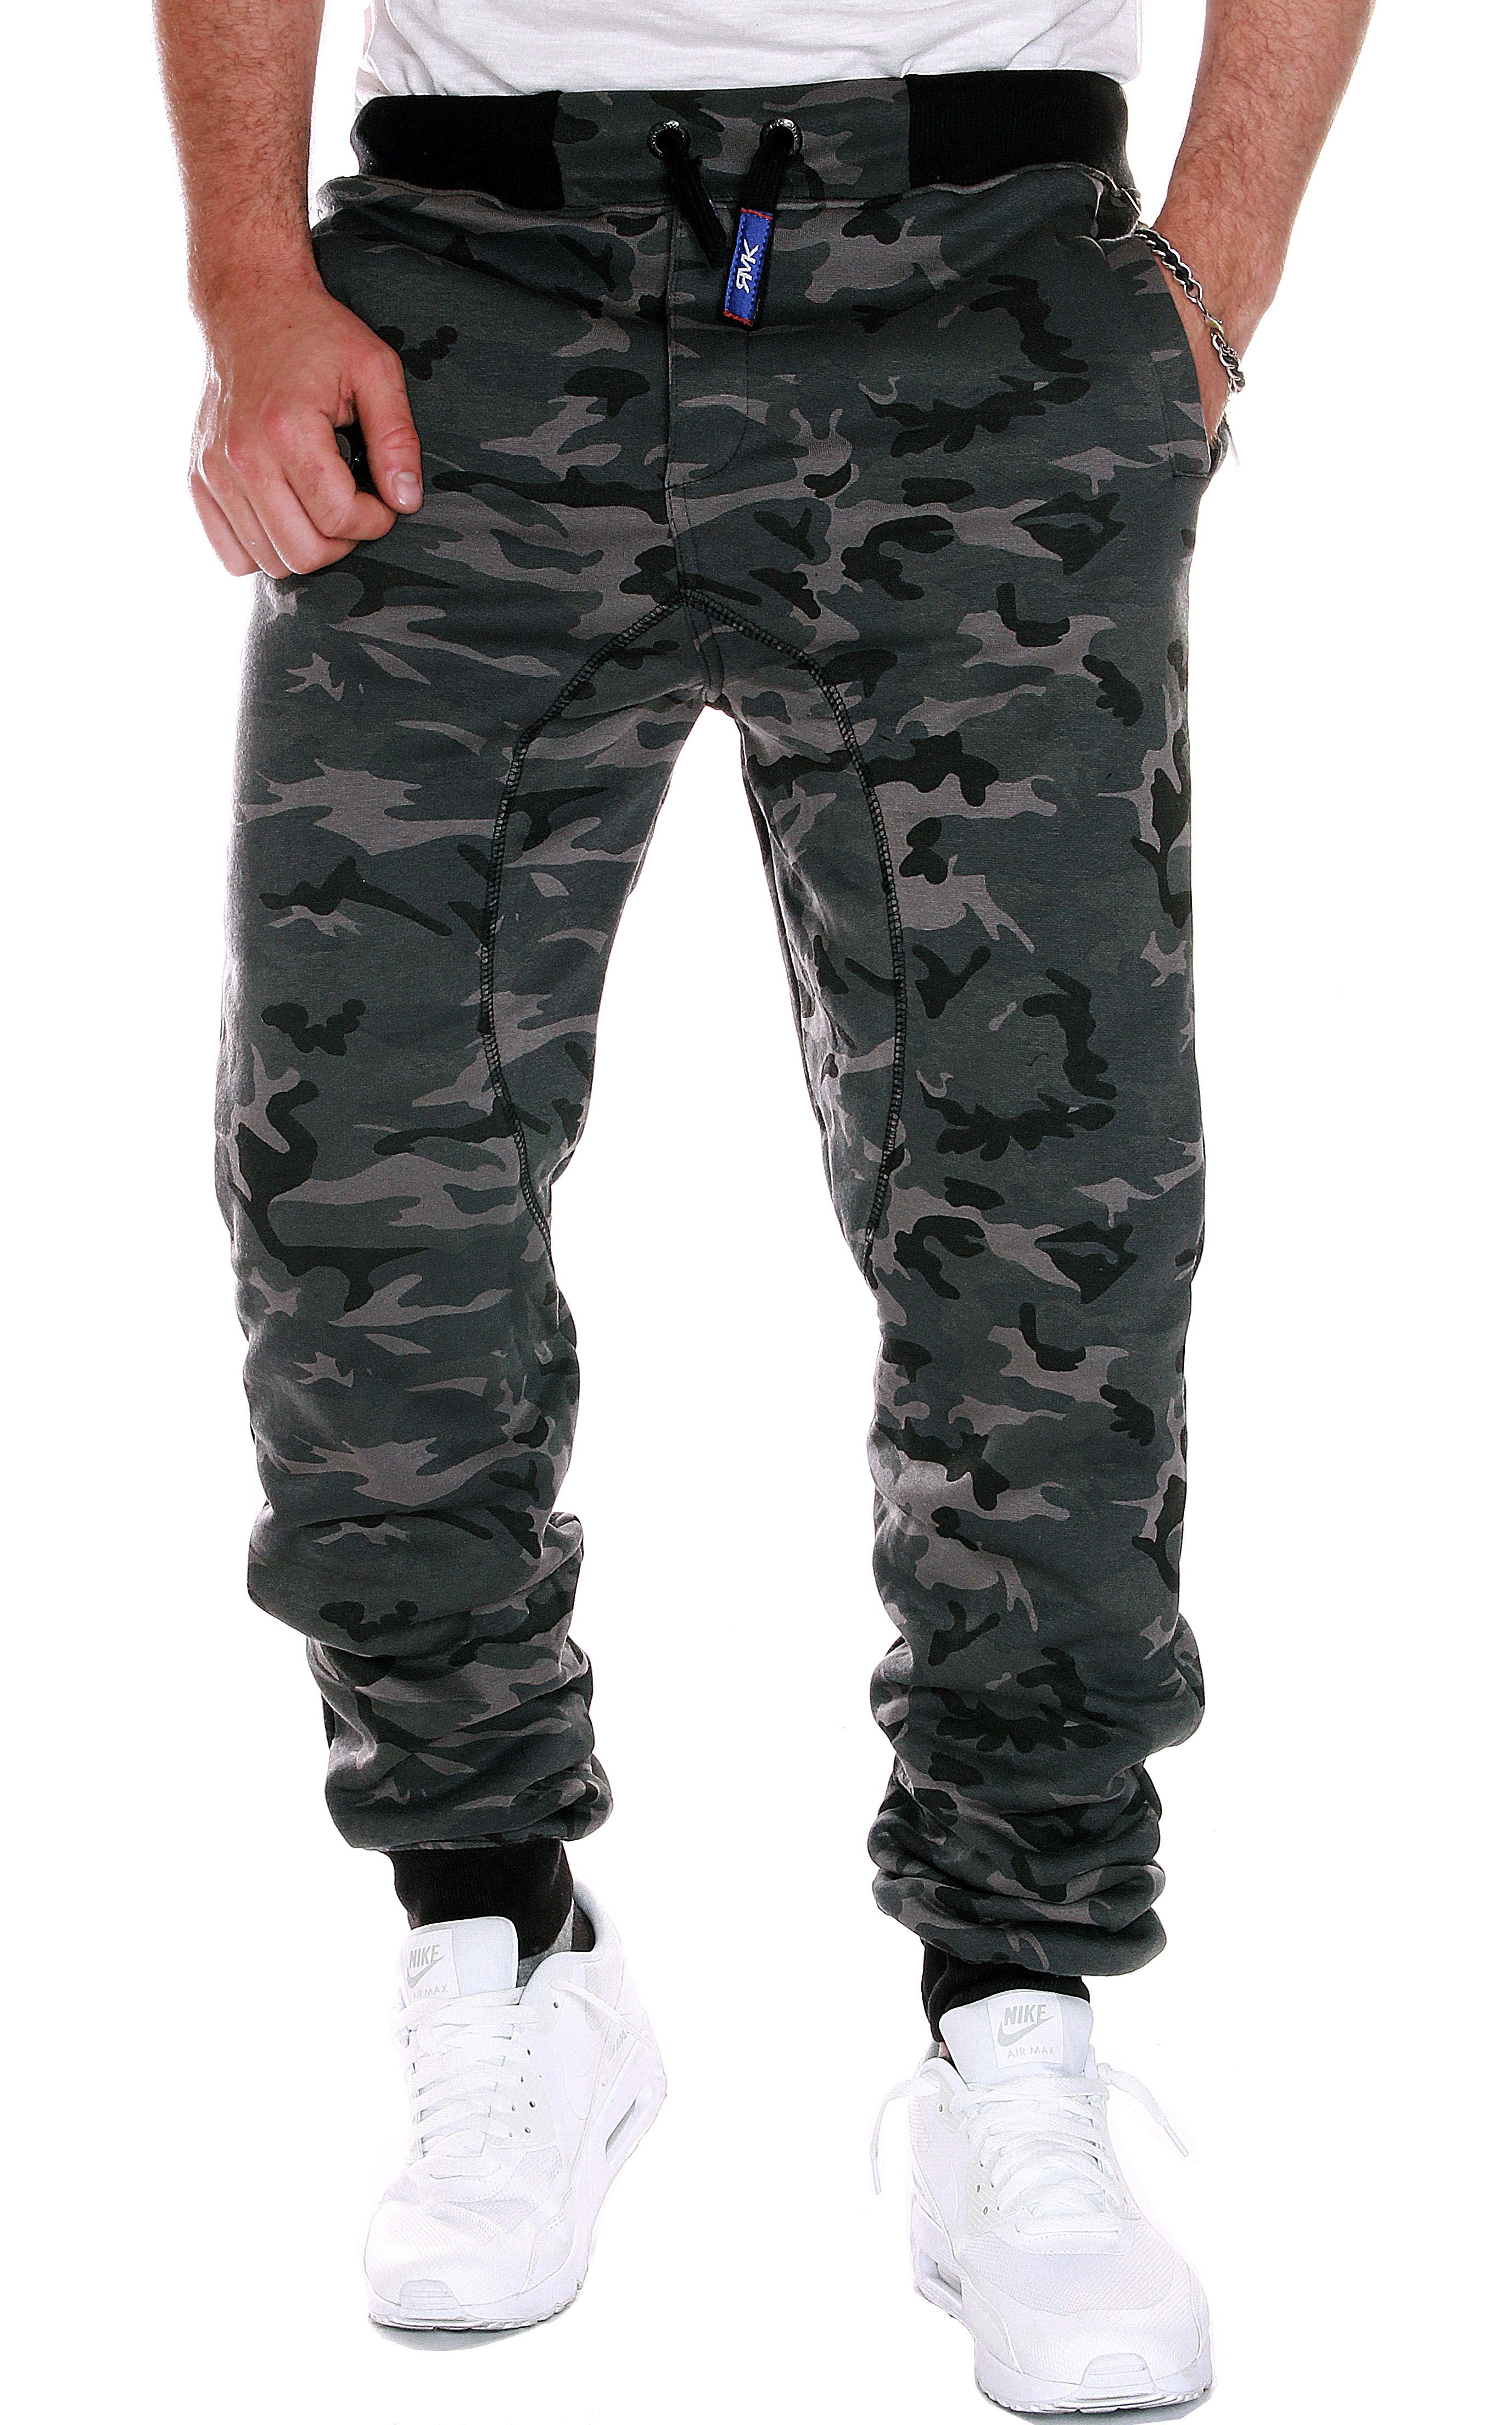 RMK Jogginghose »Herren Sporthose Fitnesshose Trainingshose Camouflage Army  Armee Tarnmuster H.03« online kaufen | OTTO